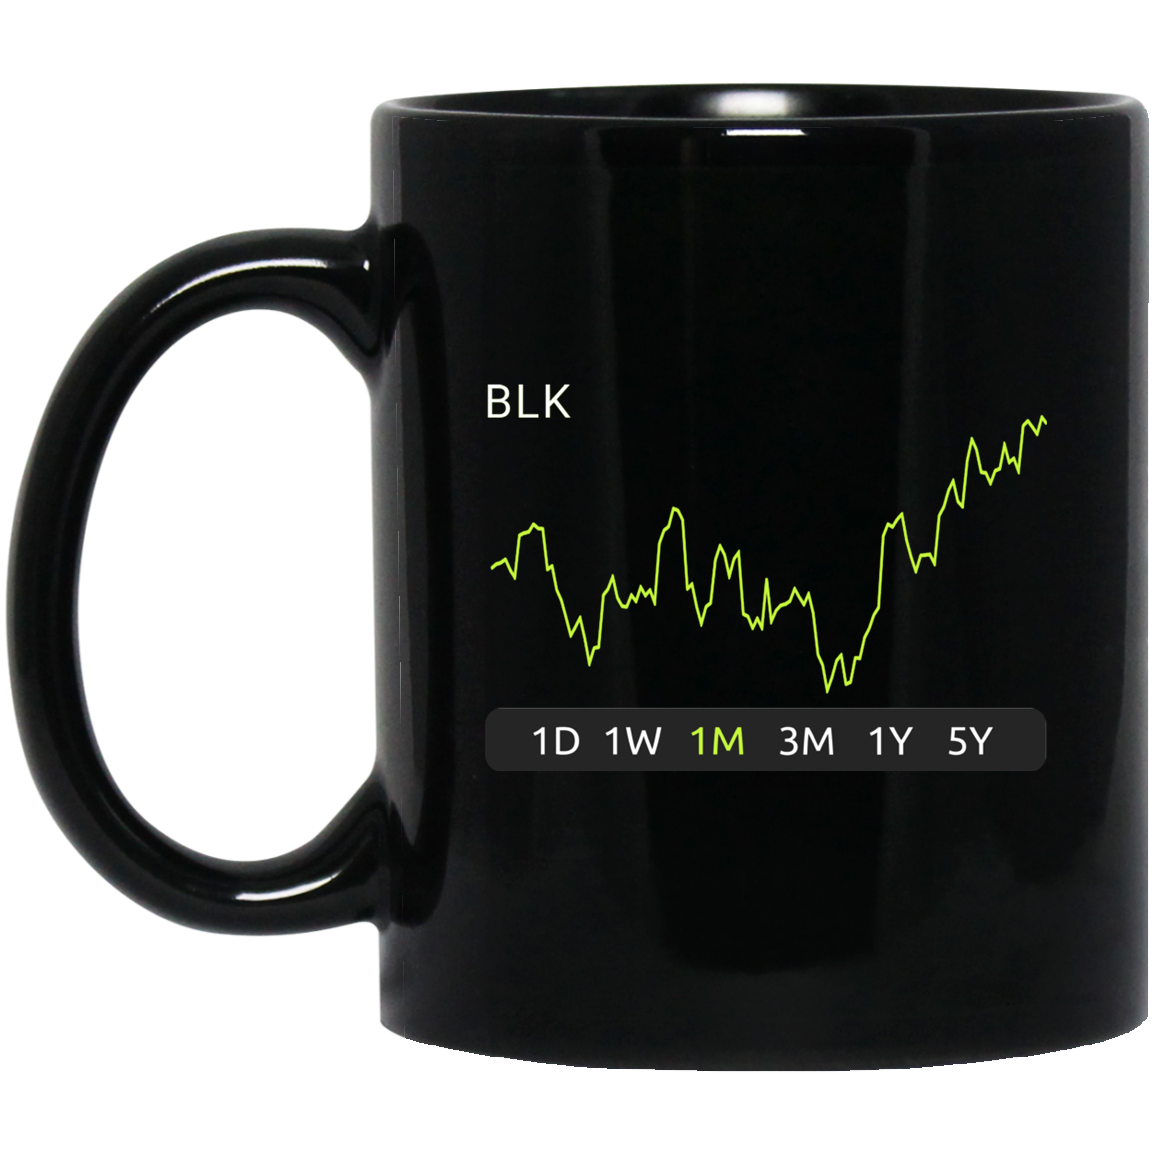 BLK Stock 1m Mug